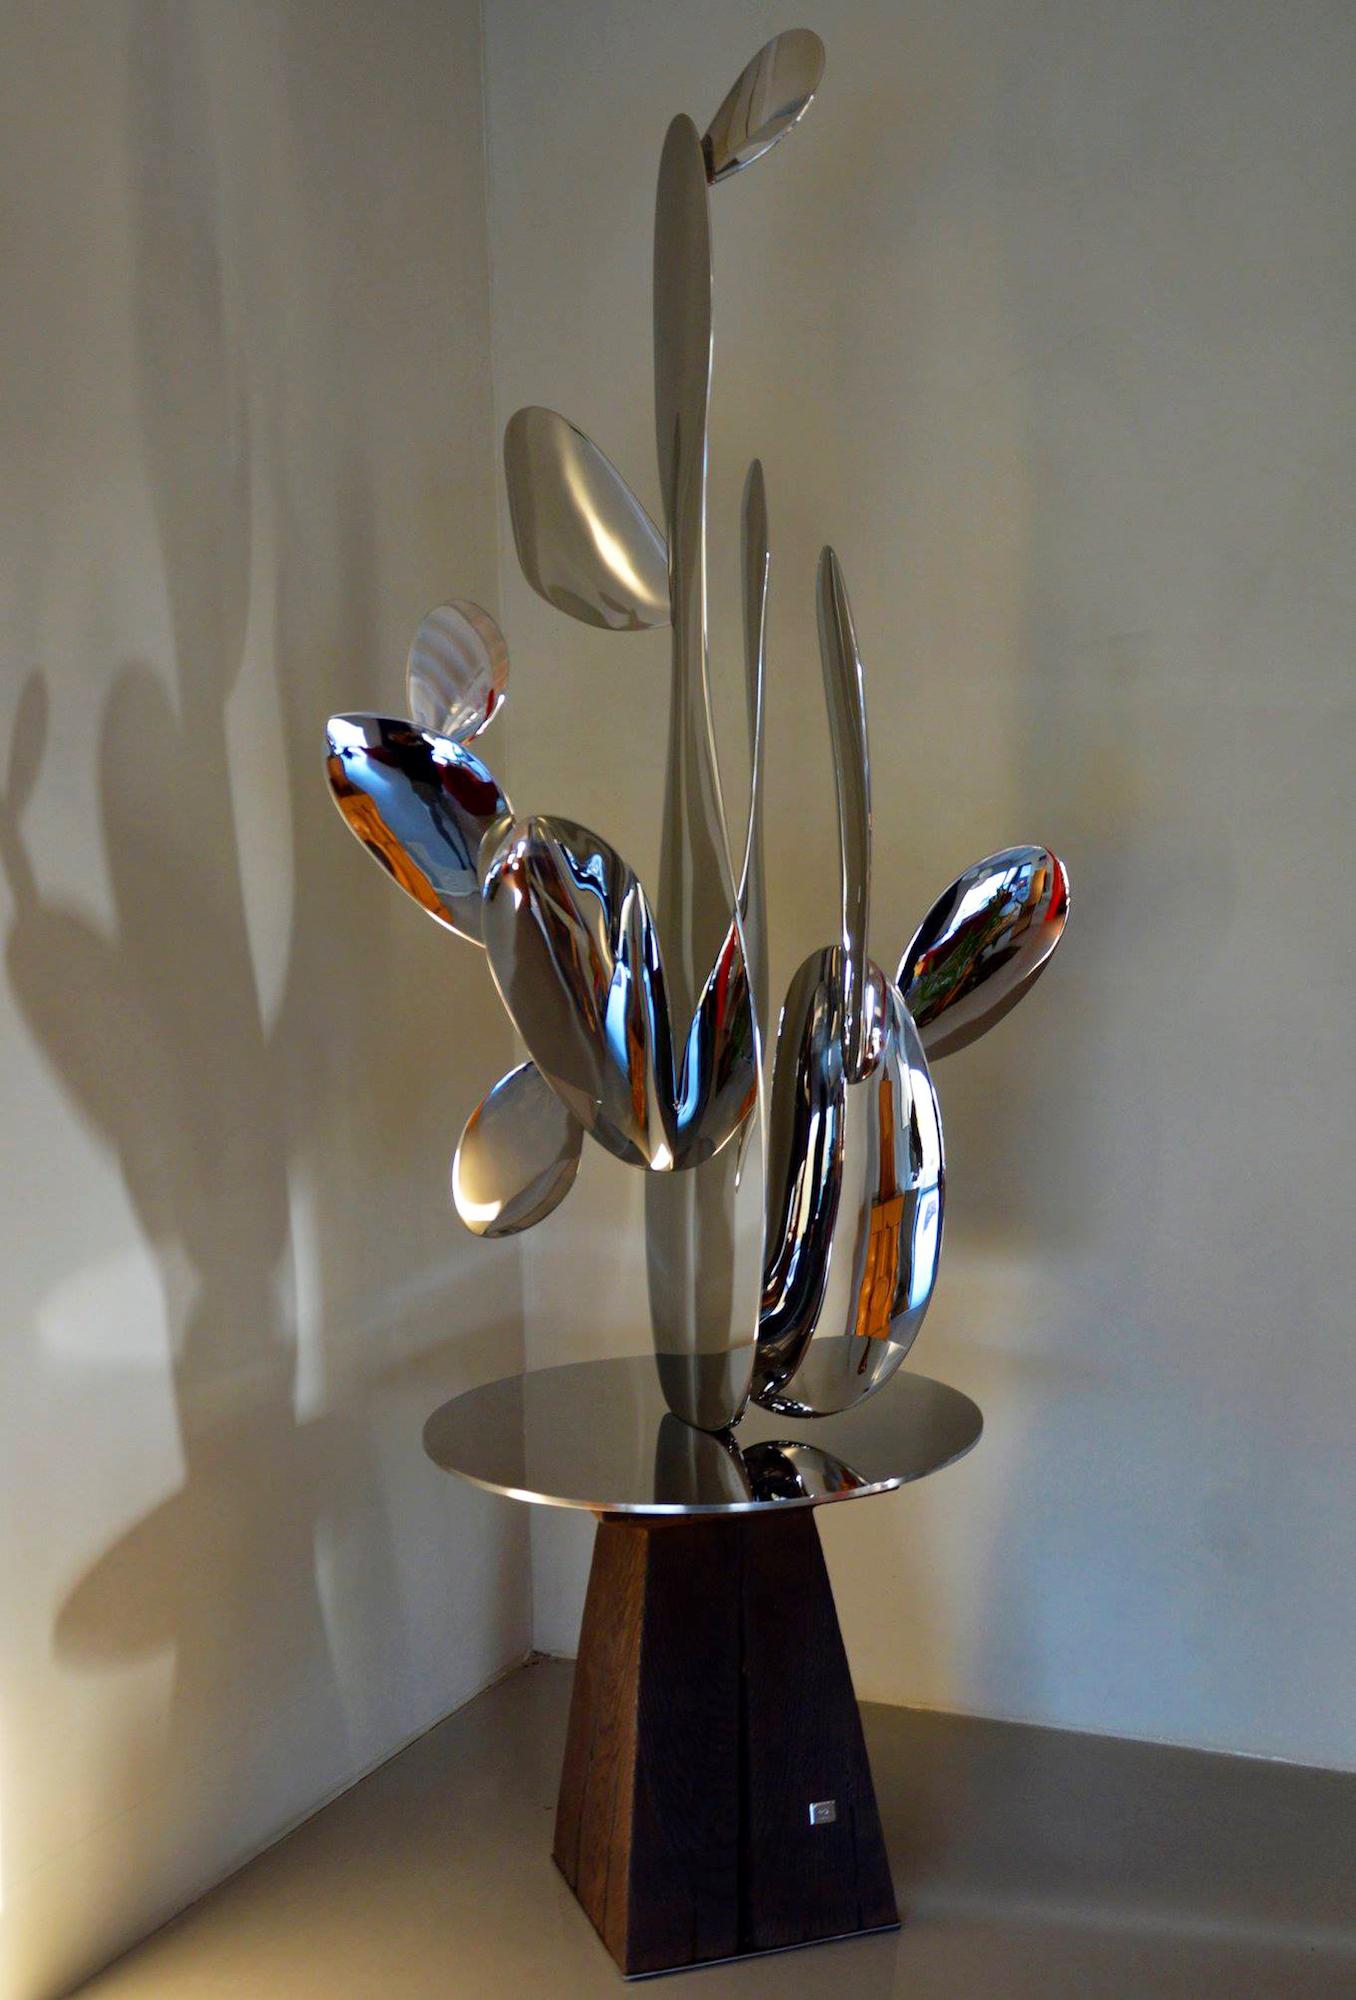 Kaktus by Franck K - Stainless steel sculpture, reflections, light, vision For Sale 1